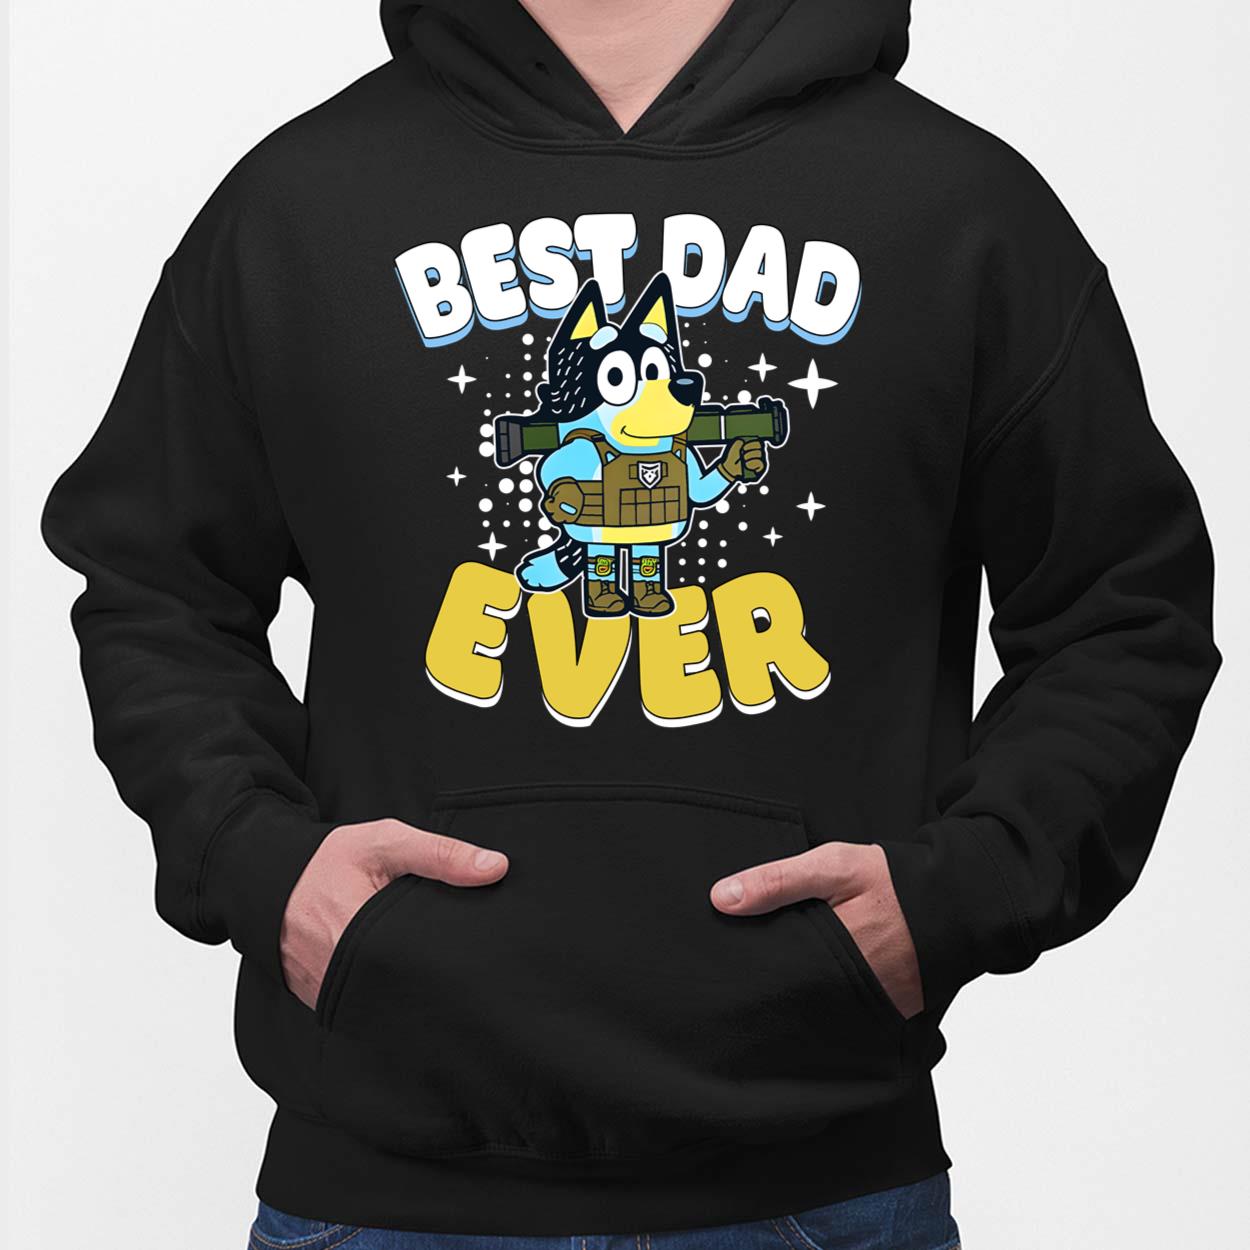  Bluey Dad Shirt